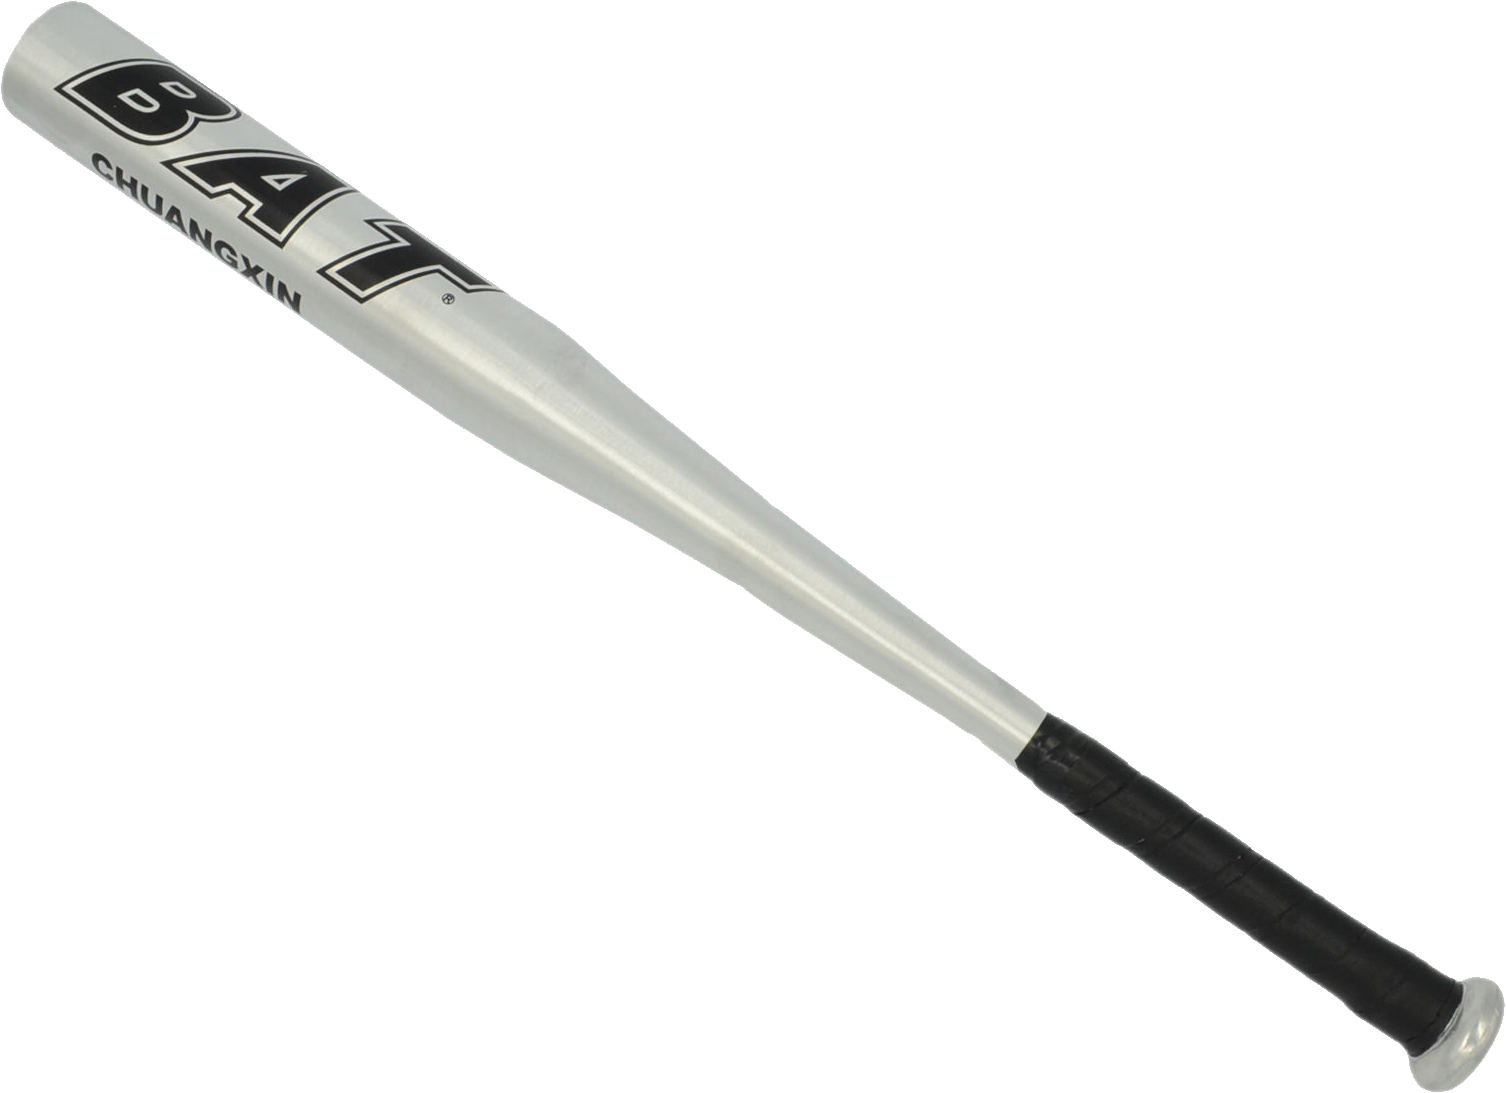 Baseball Bat Png Image - Torque Wrench Tm 50 (1506x1093), Png Download